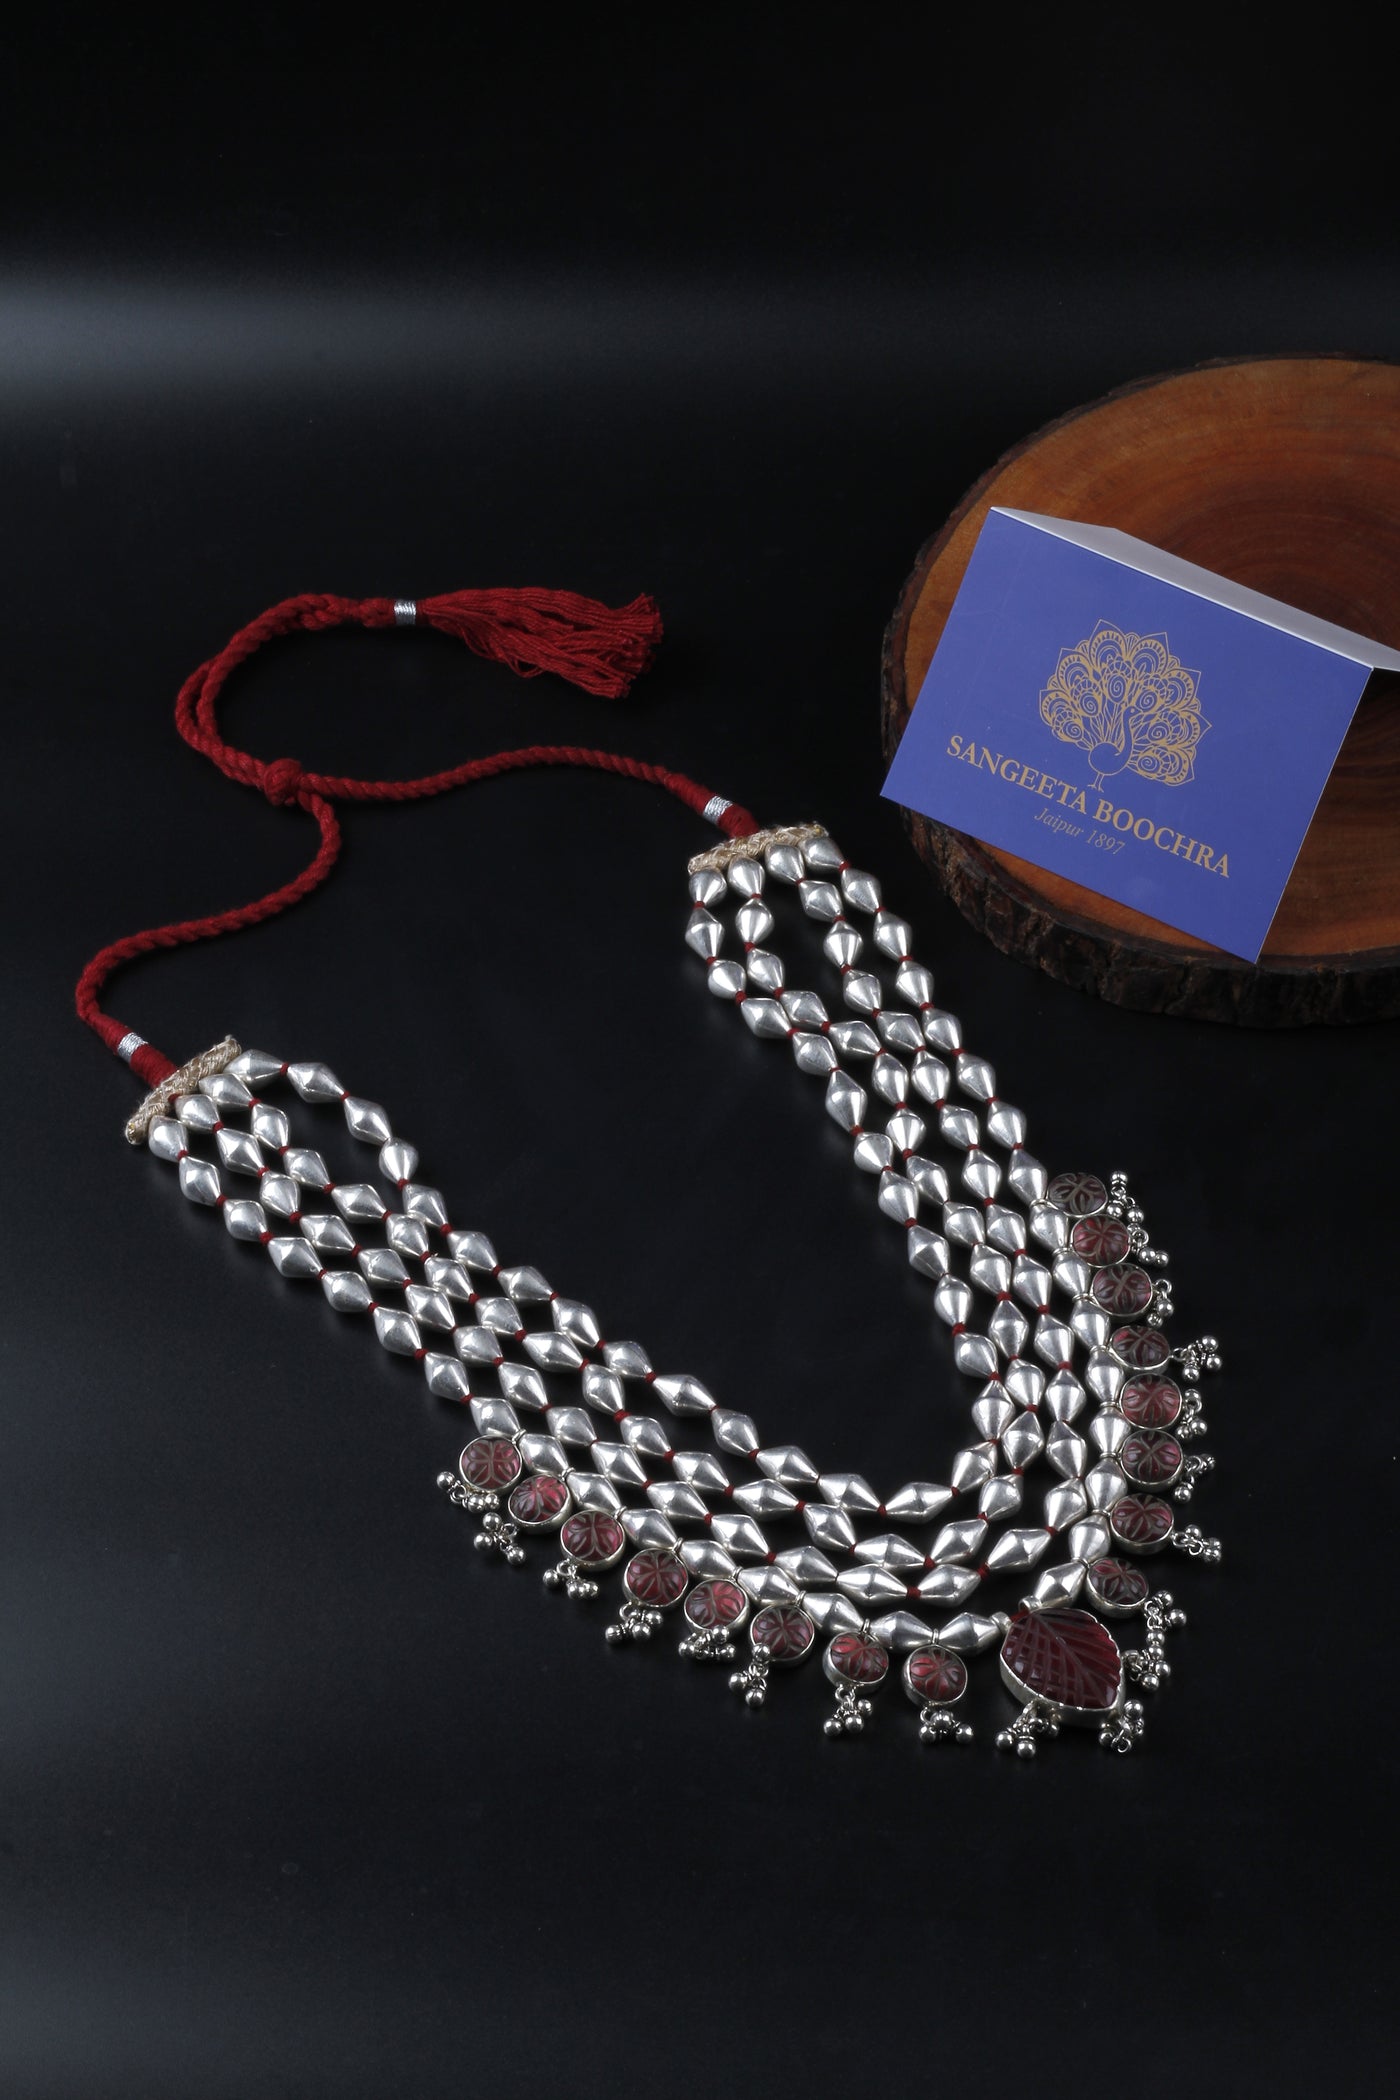 Kanika Kapoor in Sangeeta Boochra Silver Handmade Necklace And Earrings